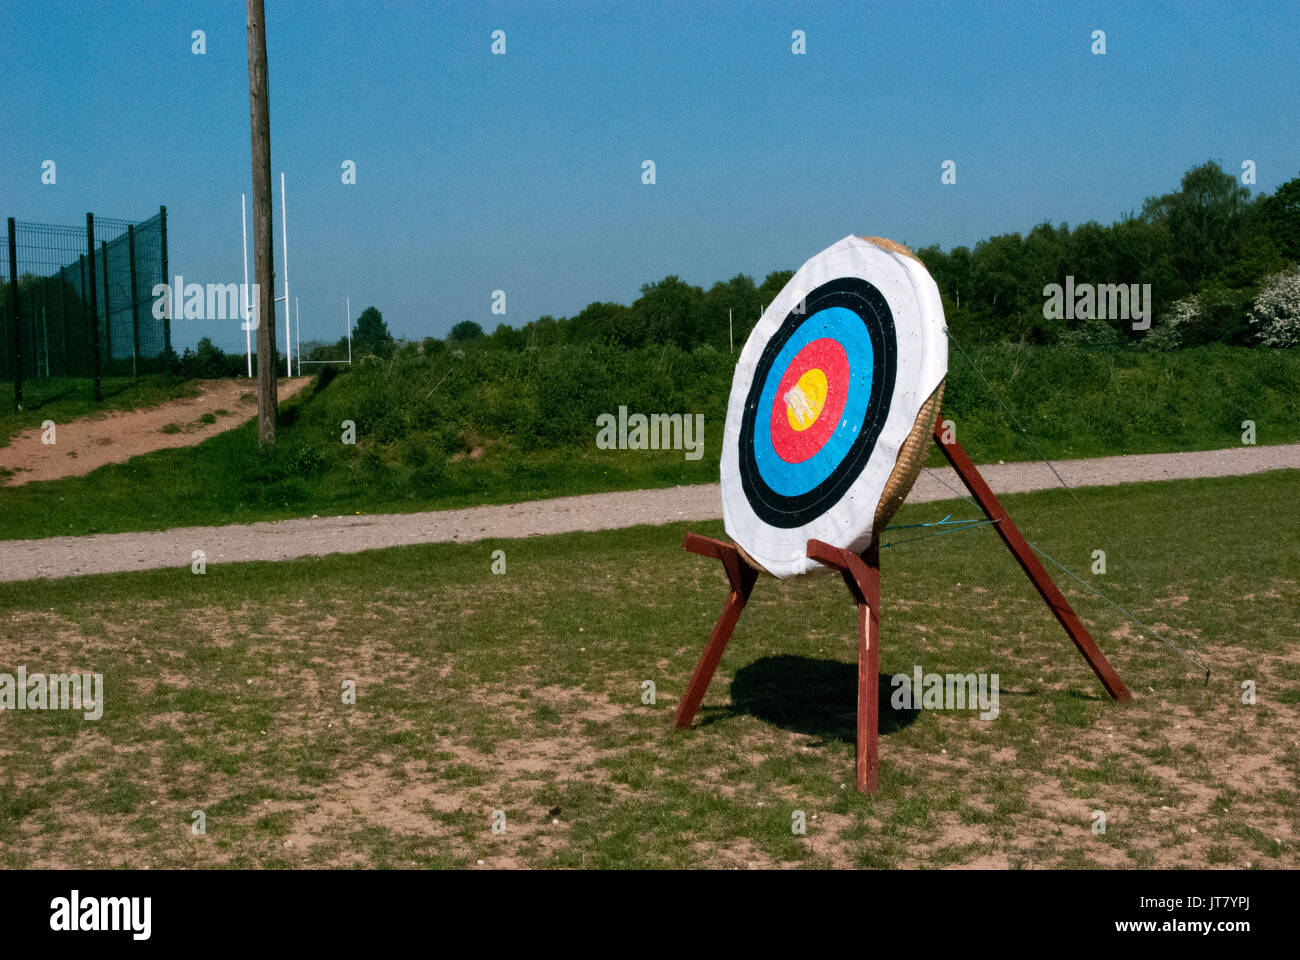 Archery, Target Practice, Archery Board, Archery Board Scoring Zone, Archery Target Board Stand, Side Profile Shot, Archery Equipment, Sports Field Stock Photo